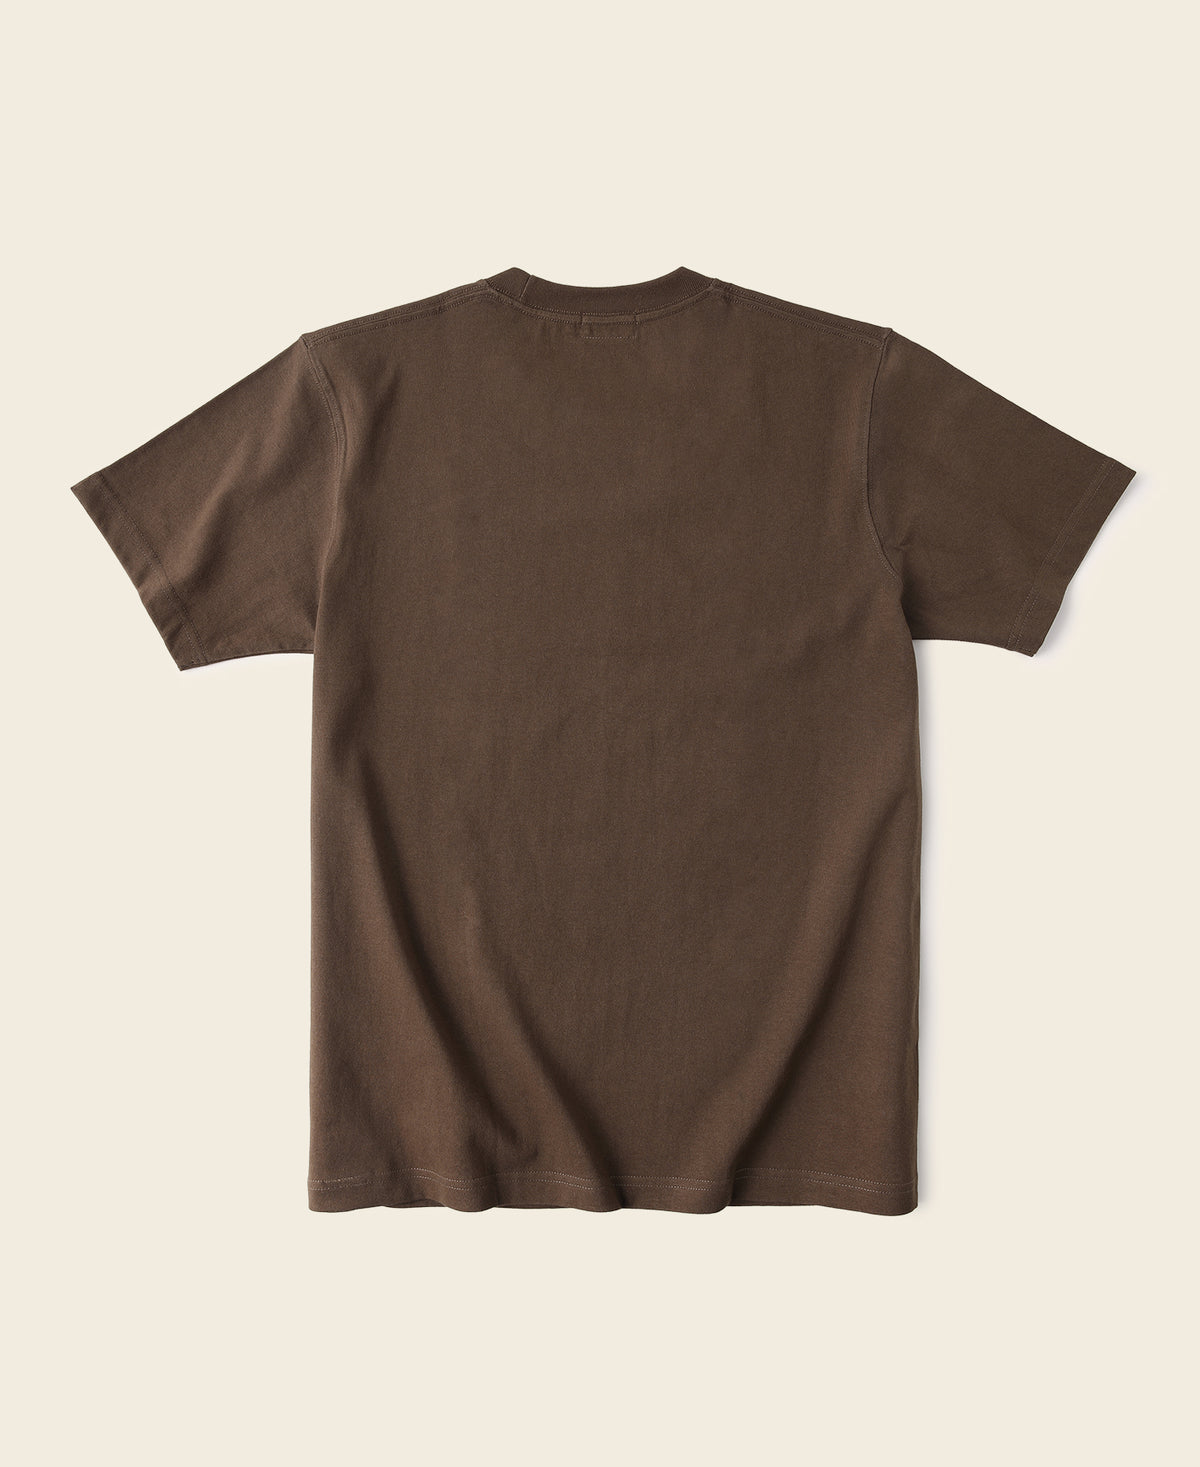 9 oz US Cotton Tubular T-Shirt - Coffee